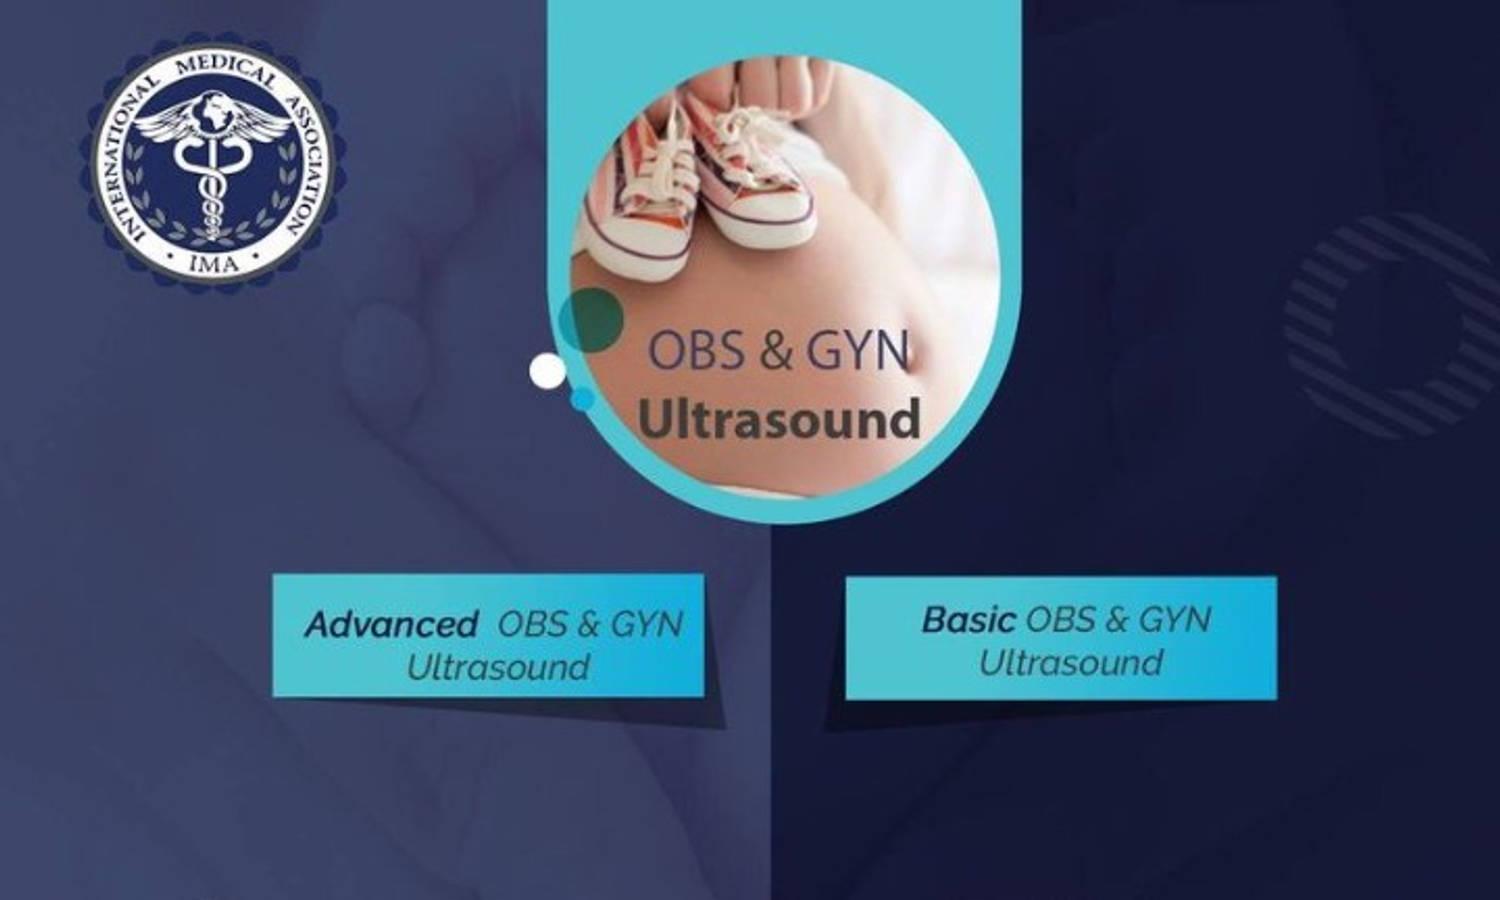 Basic and Advanced OBS & GYN Ultrasound